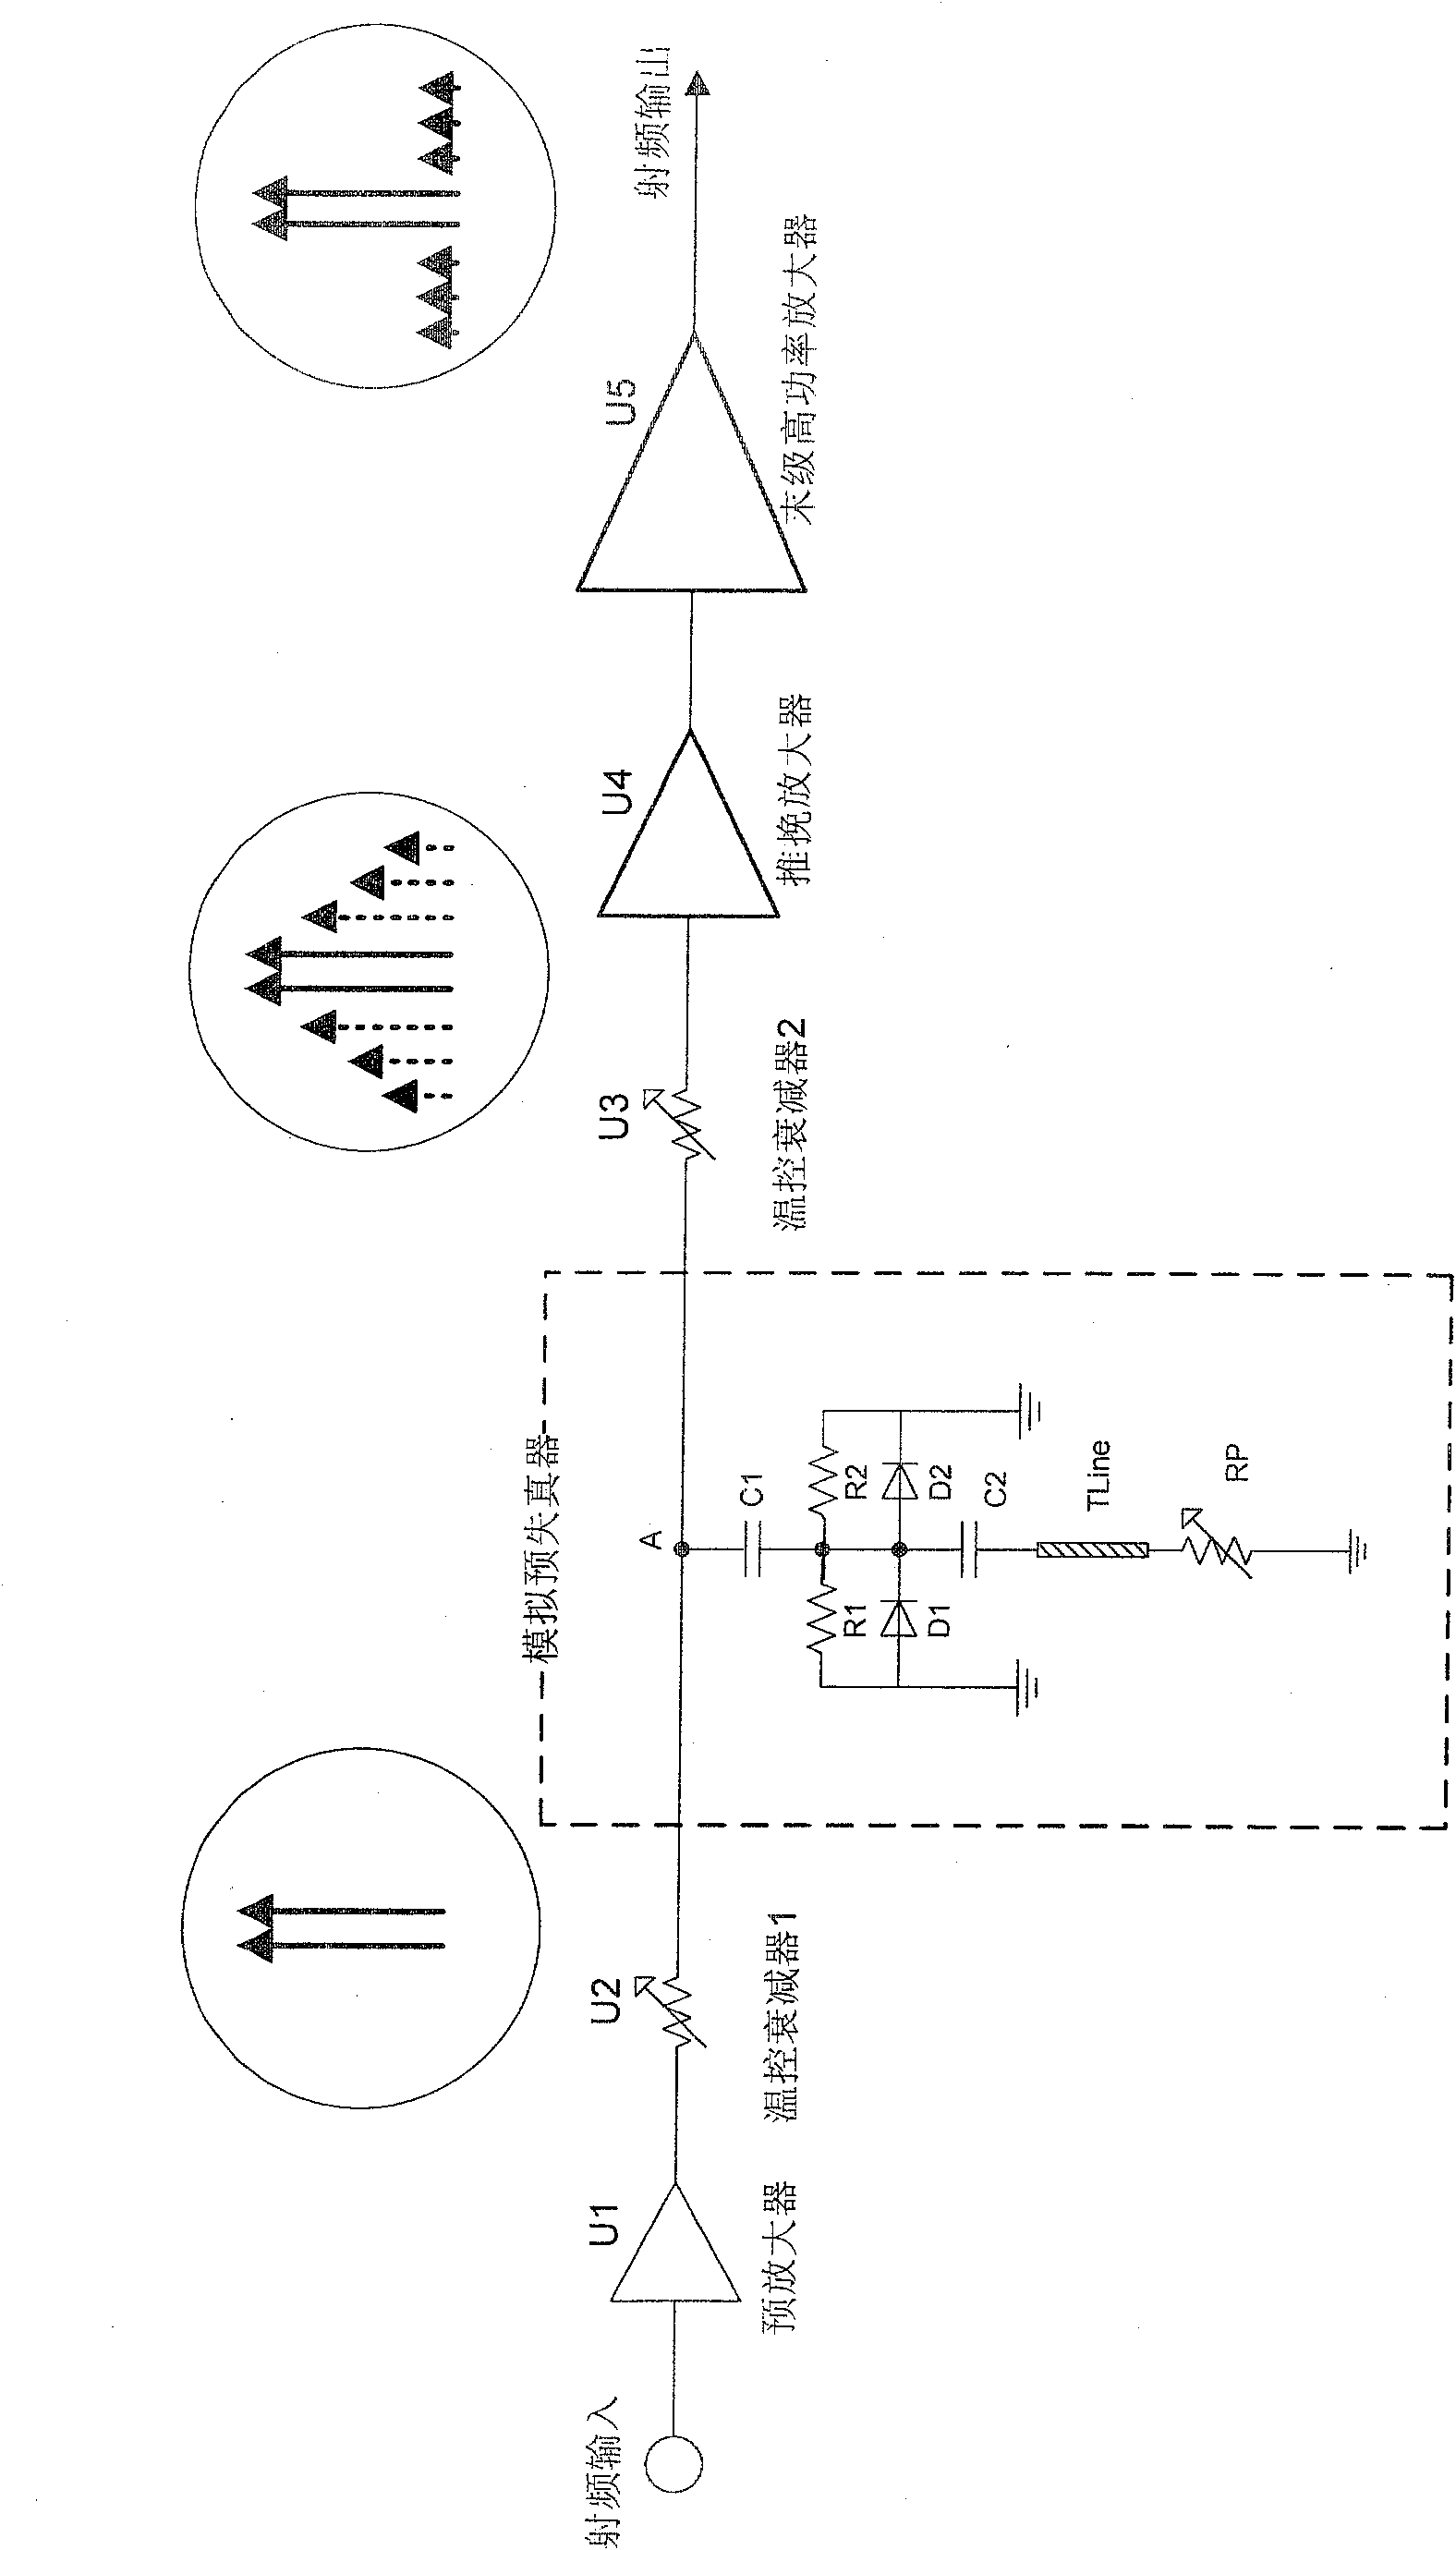 Analog predistortion based linear power amplification circuit and method